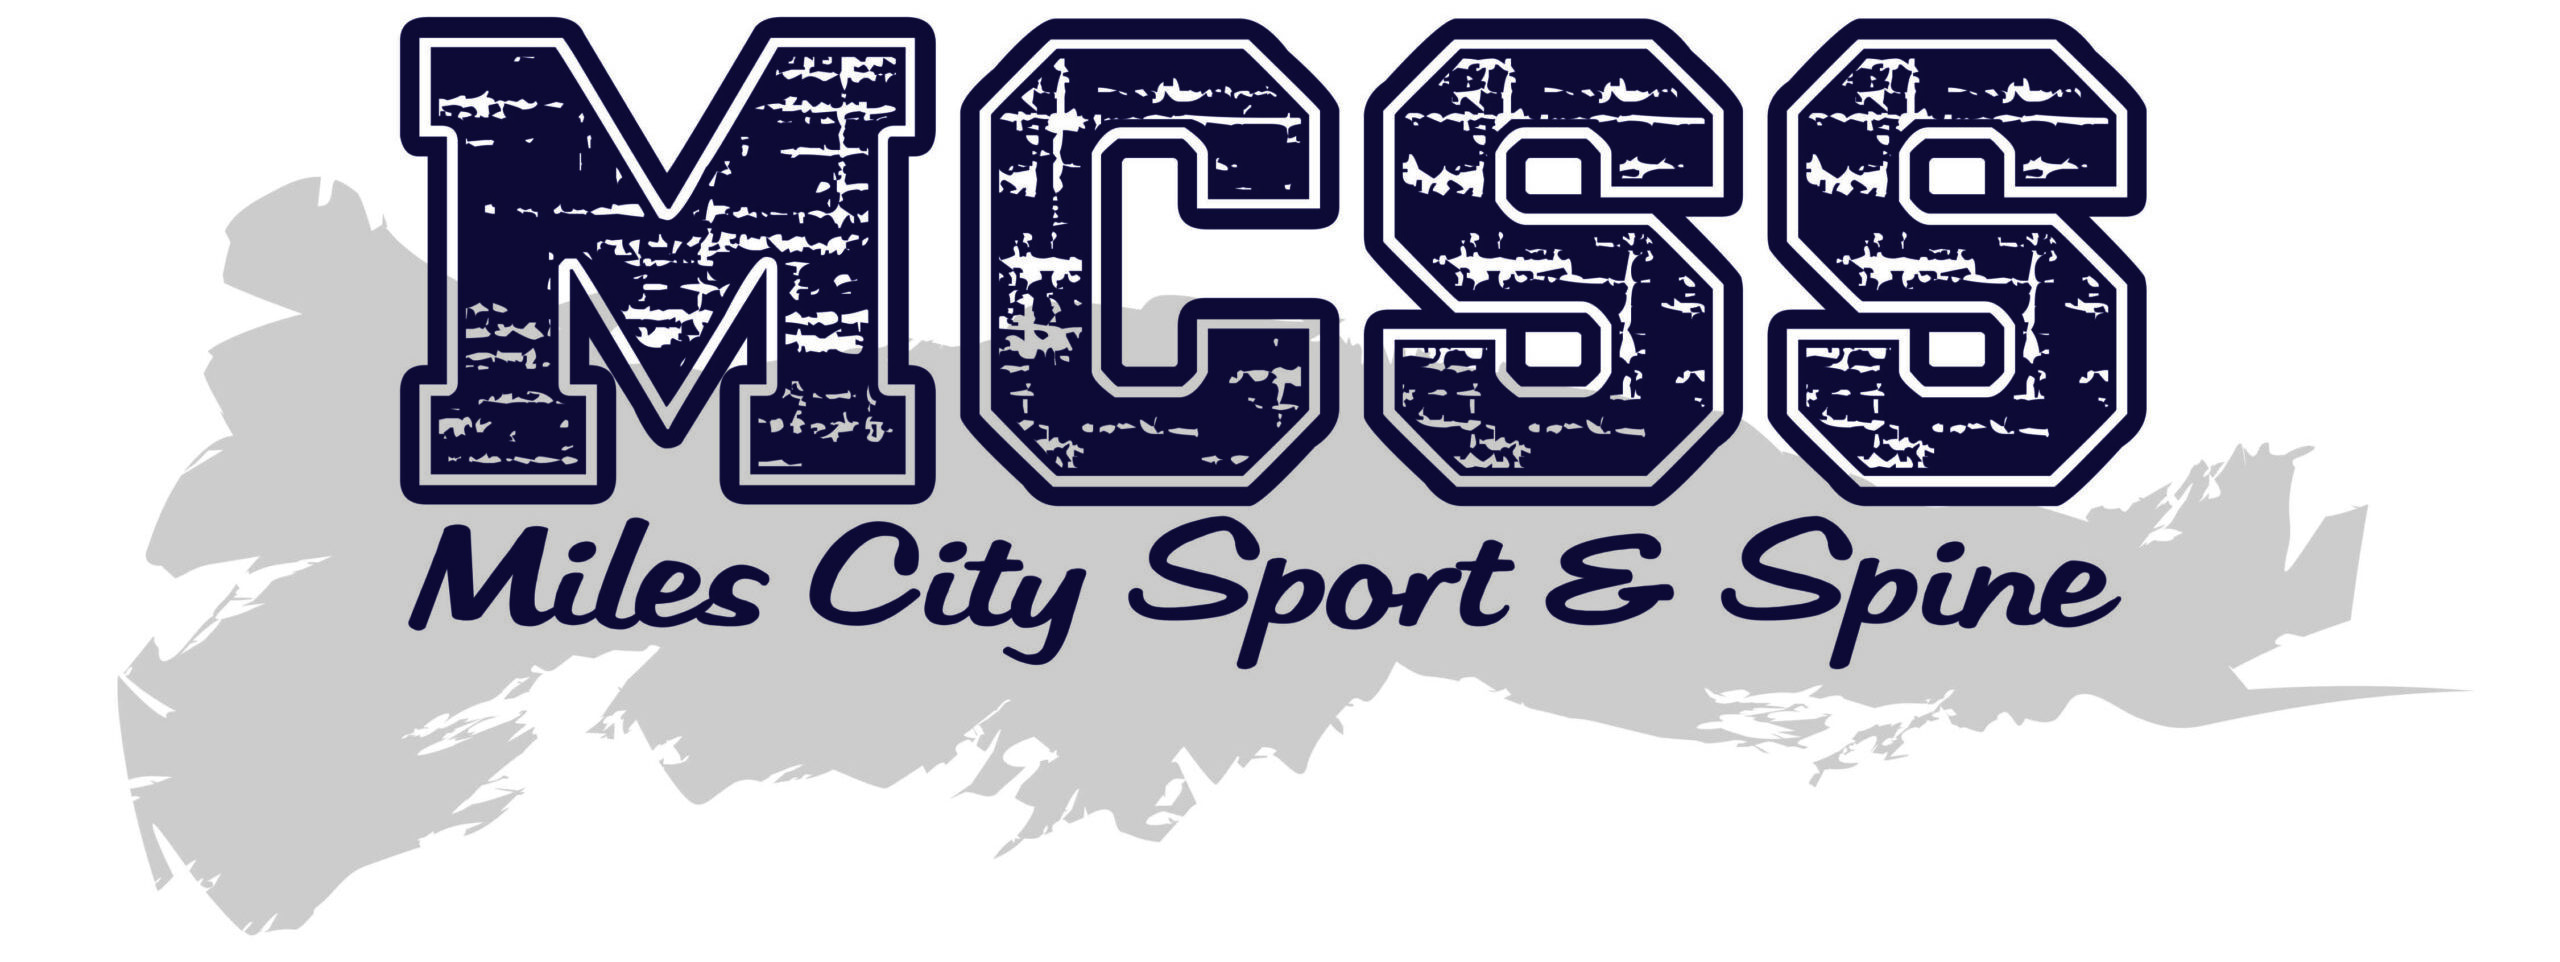 Miles City Sport & Spine